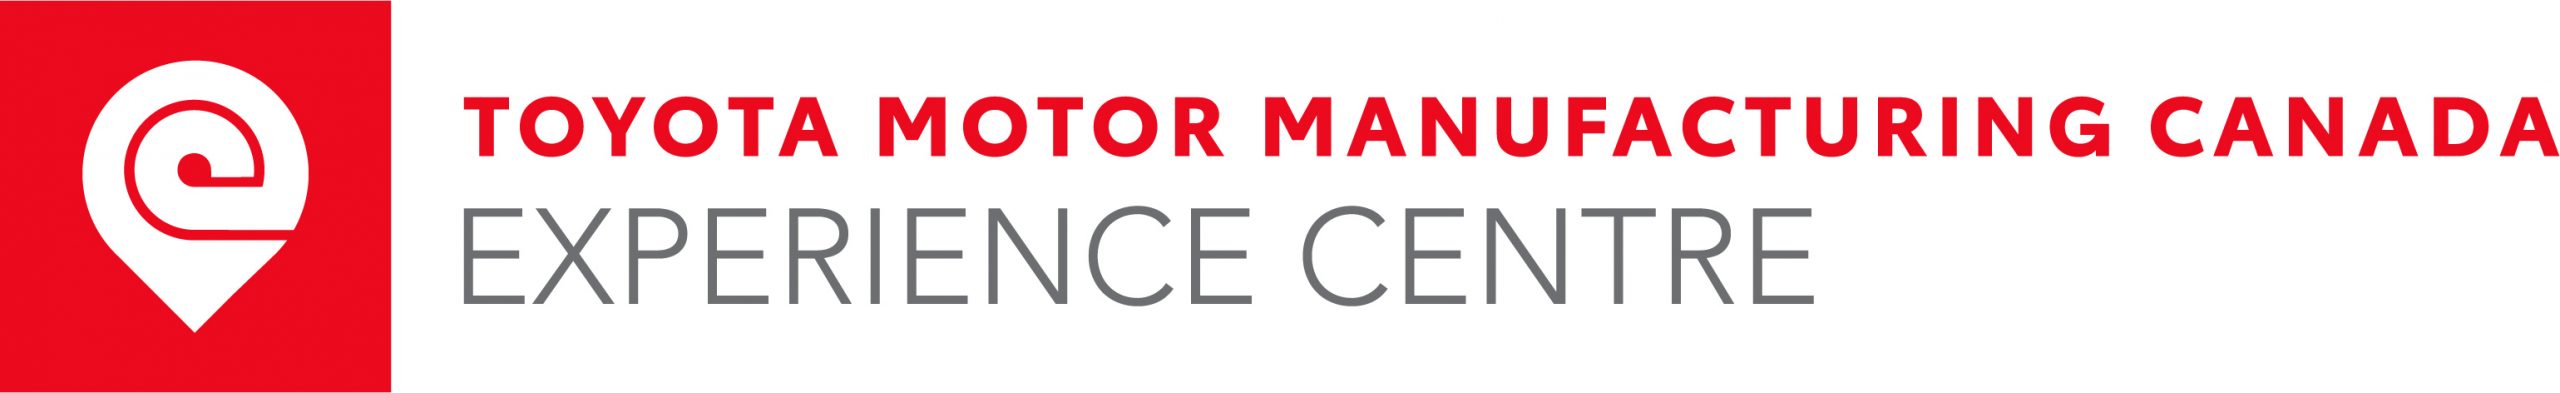 TMMC Experience Center logo